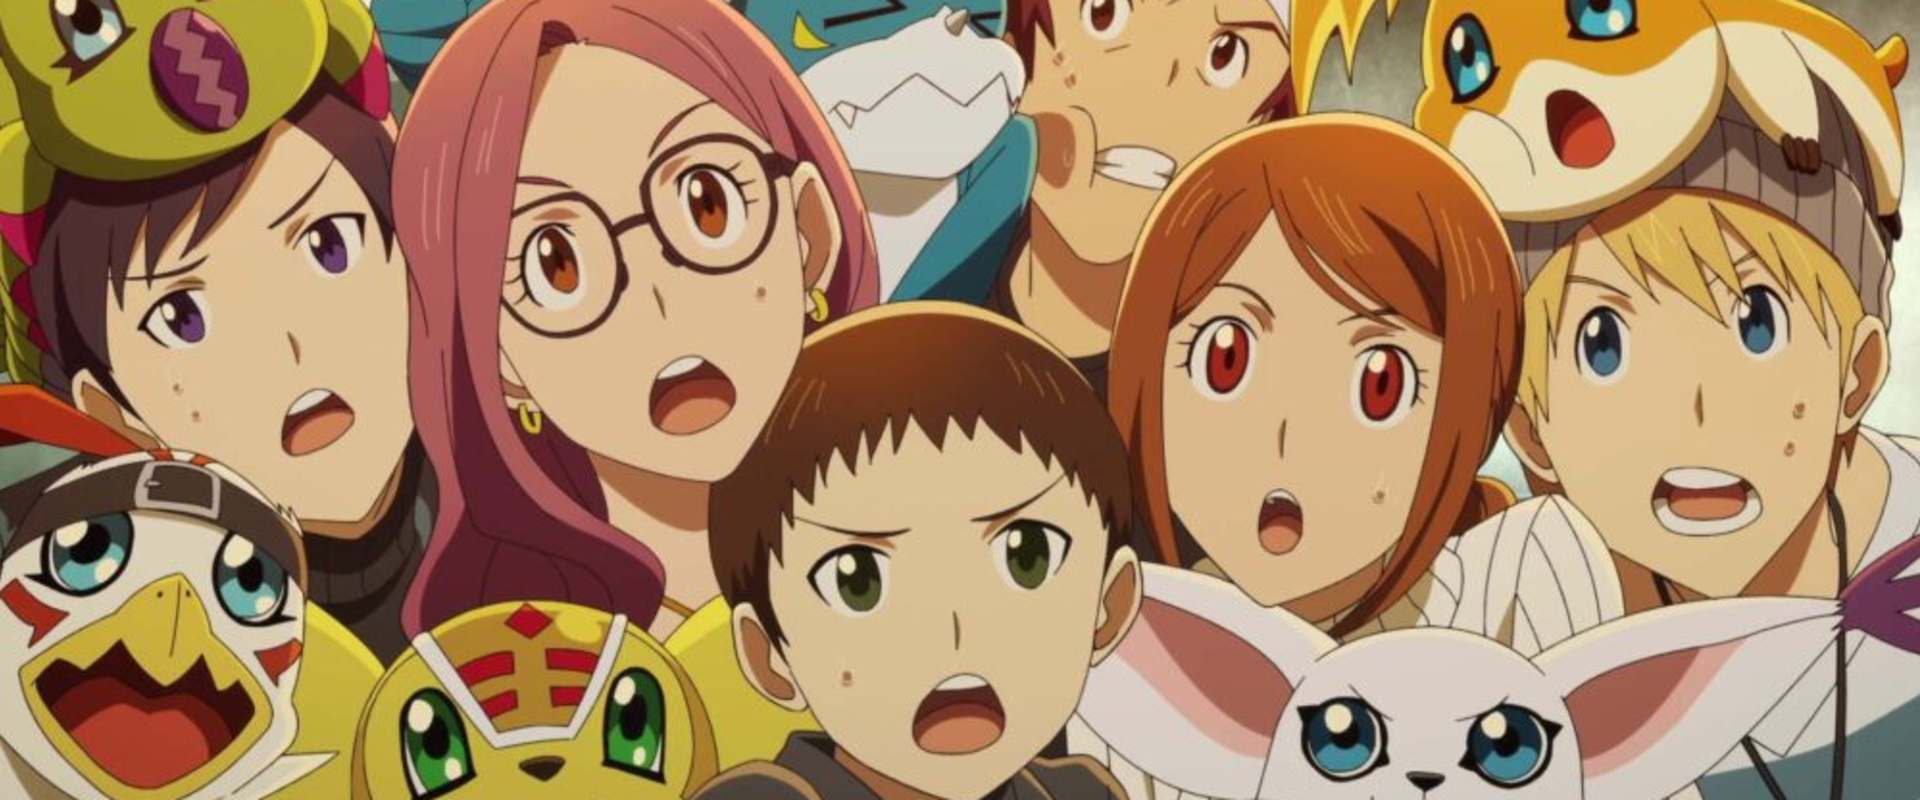 Digimon Adventure 02: The Beginning background 2